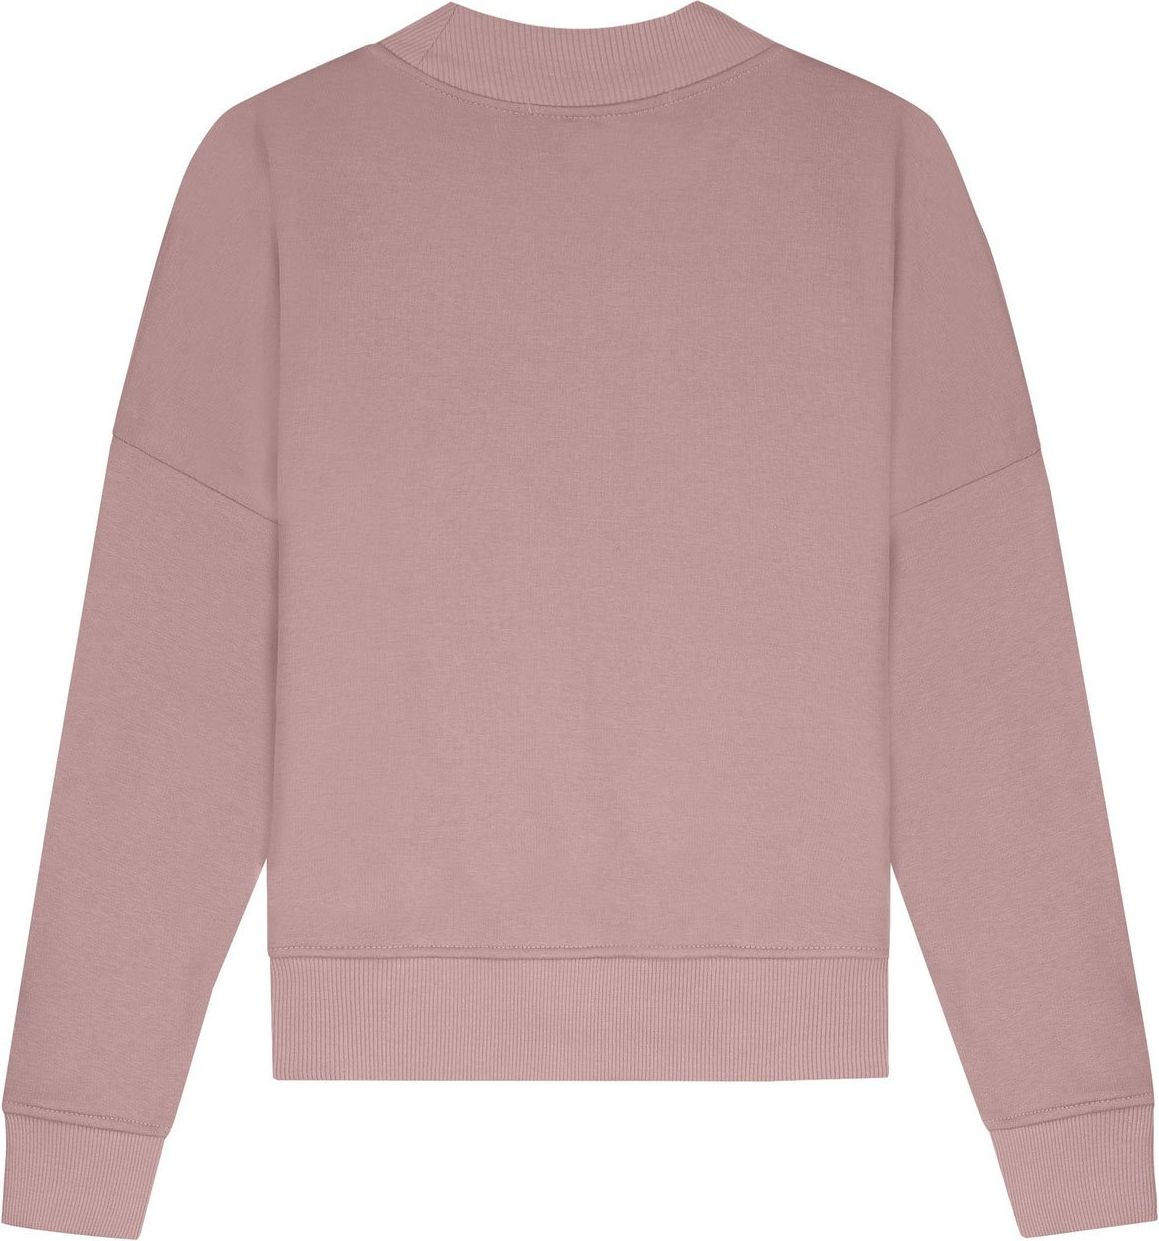 Malelions Brand Sweater - Mauve/Dark Antra Roze